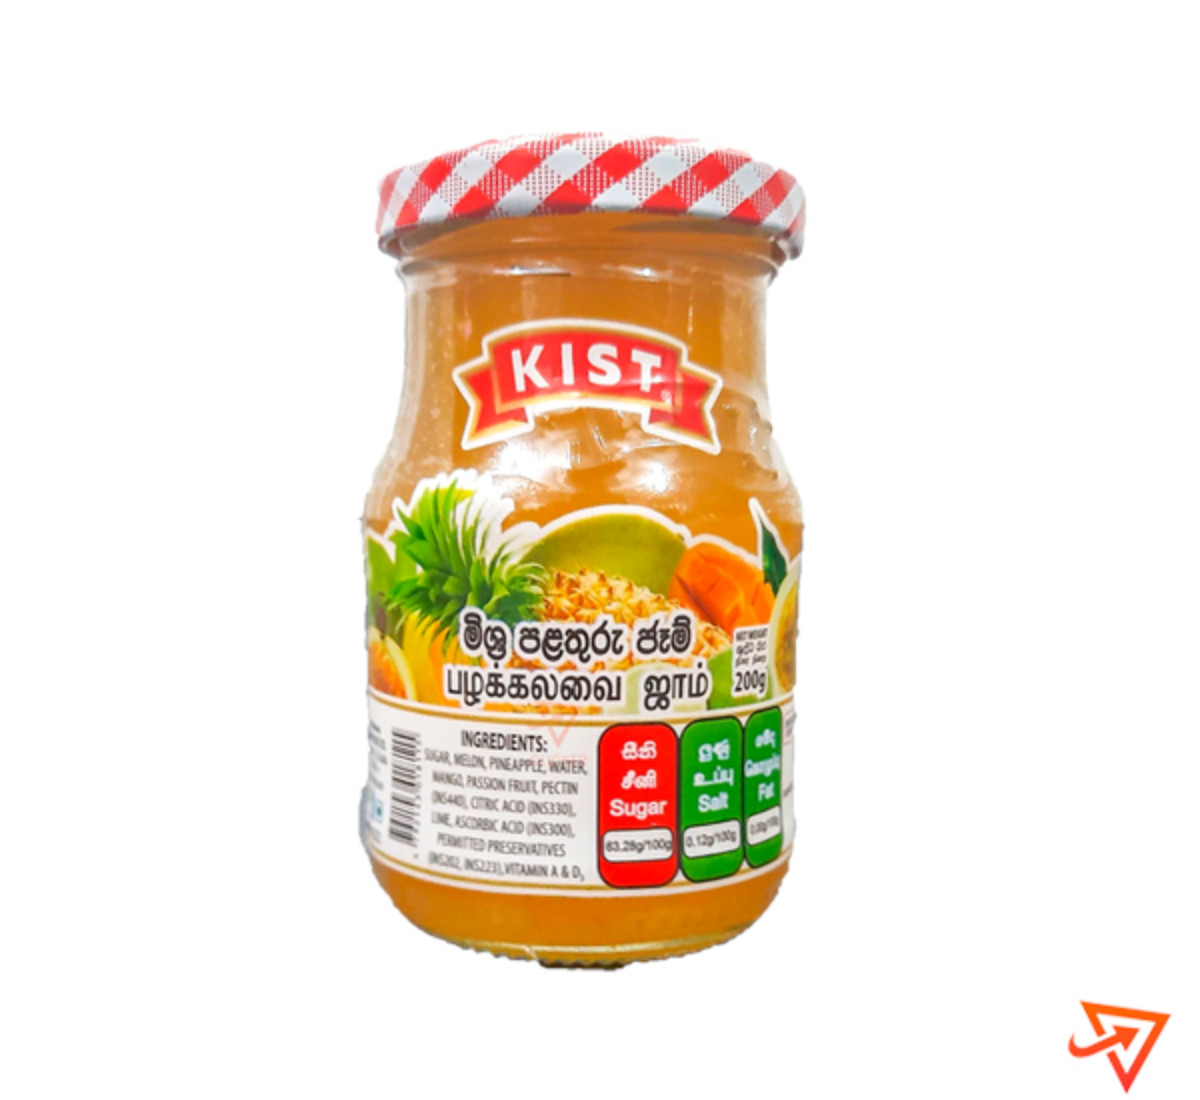 Clicker product 200g KIST Mixed Fruit Jam 1015